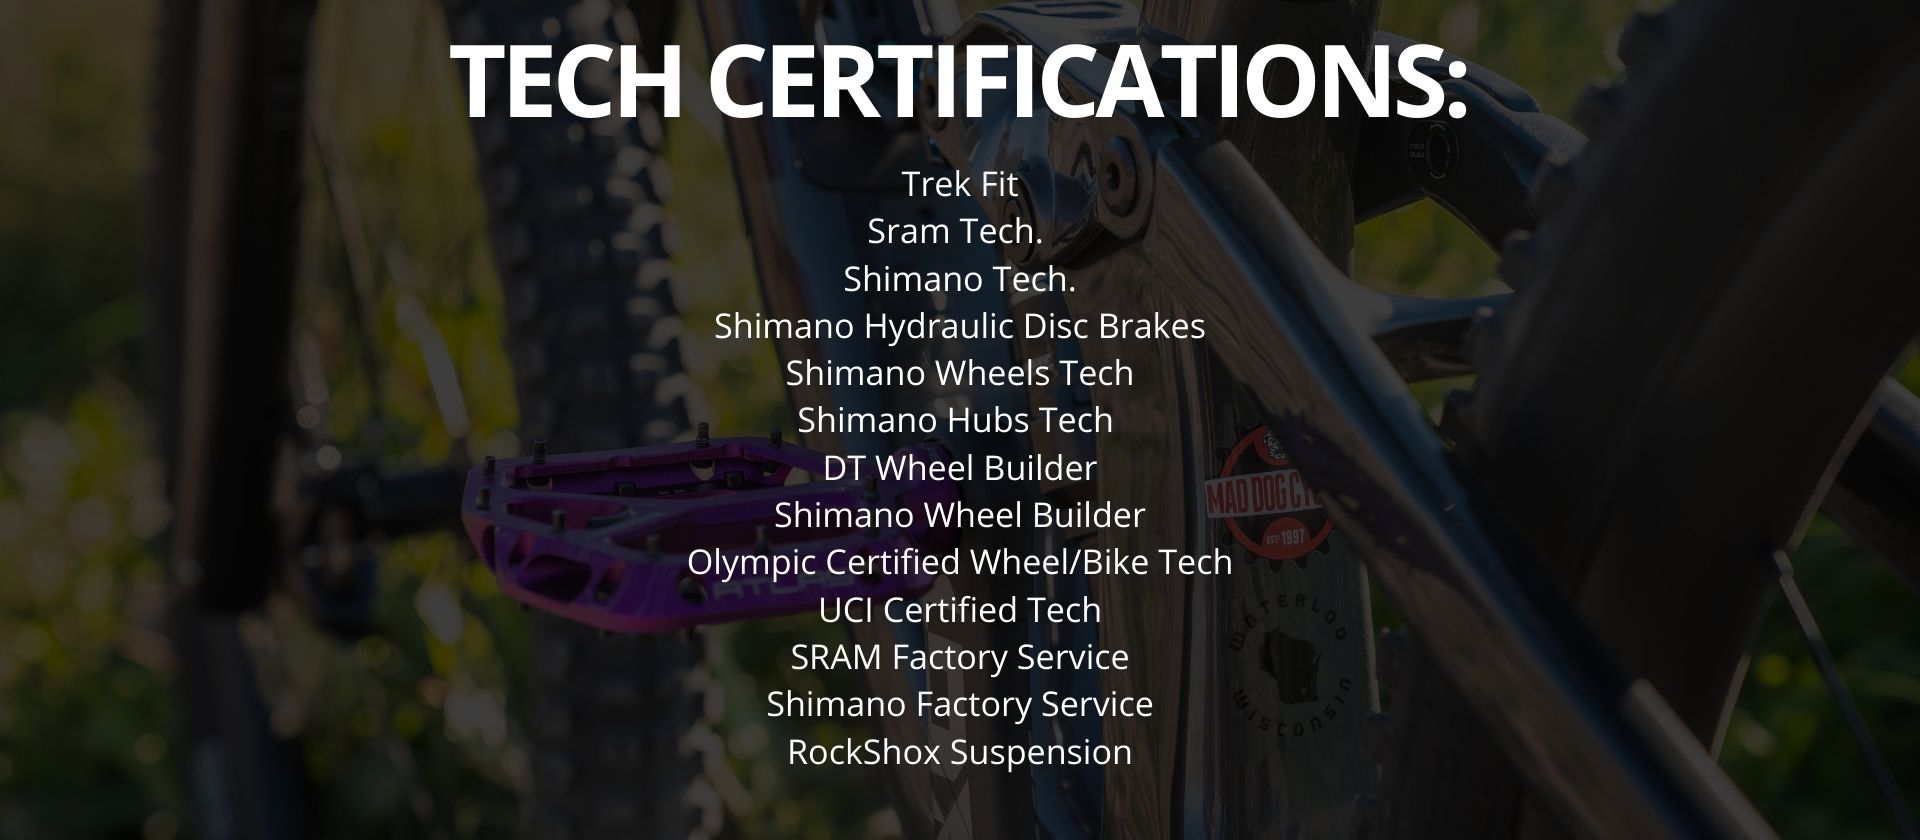 Tech Certifications for Trek Fit, Sram Tech, Shimano Tech, DT Wheel builder, Olympic certified wheel/bike tech, UCI and Rockshox suspension